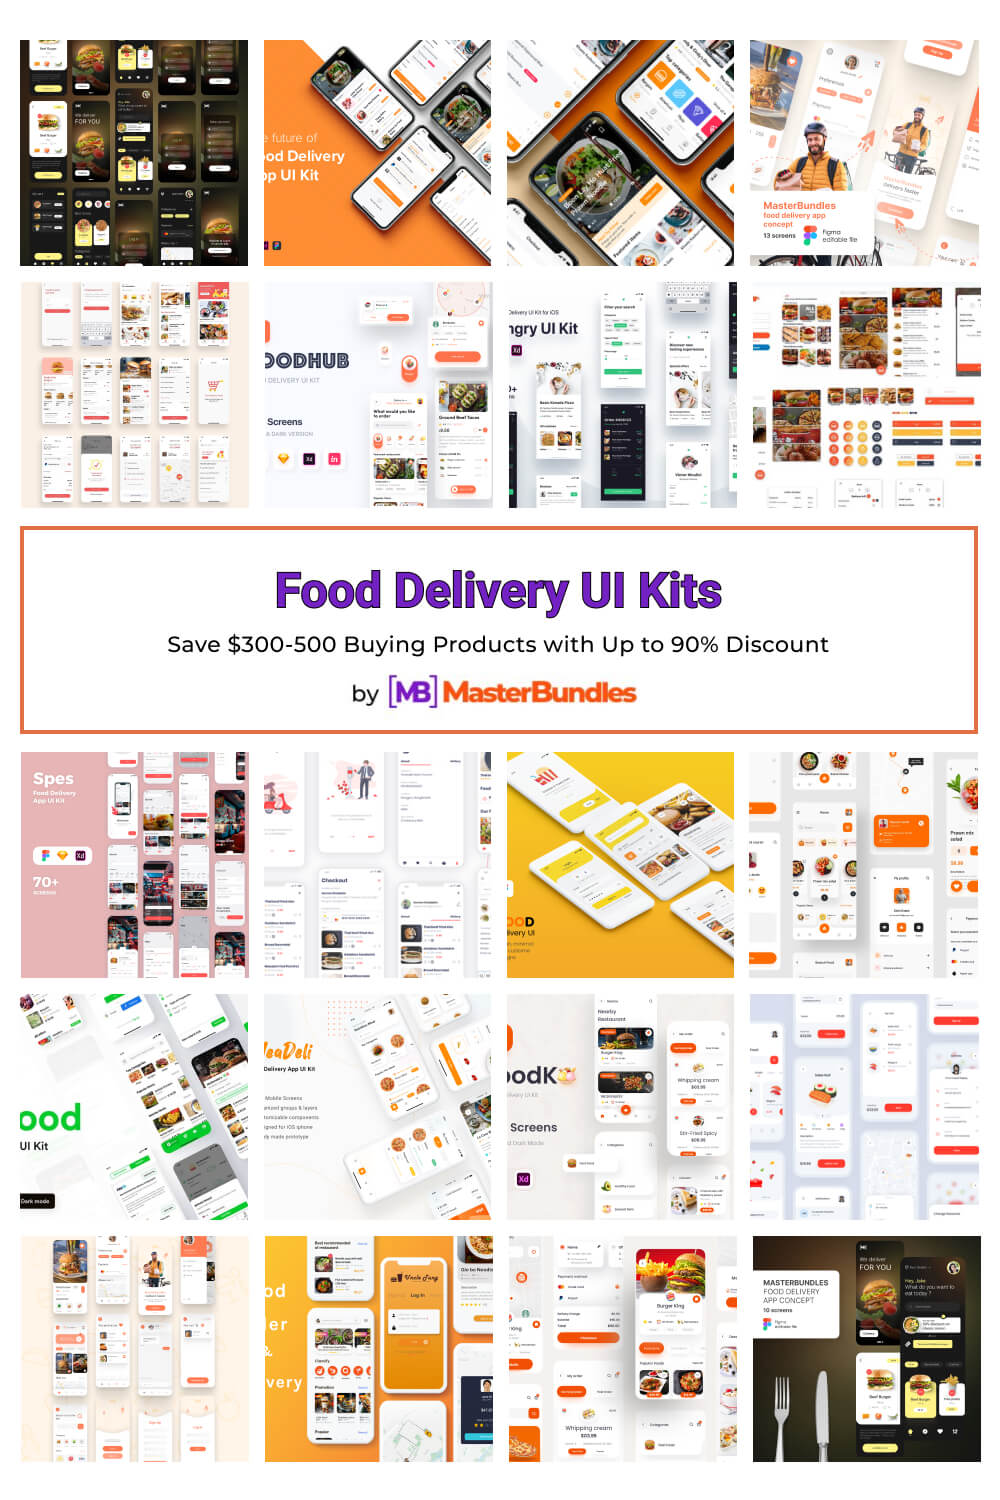 food delivery ui kits pinterest image.